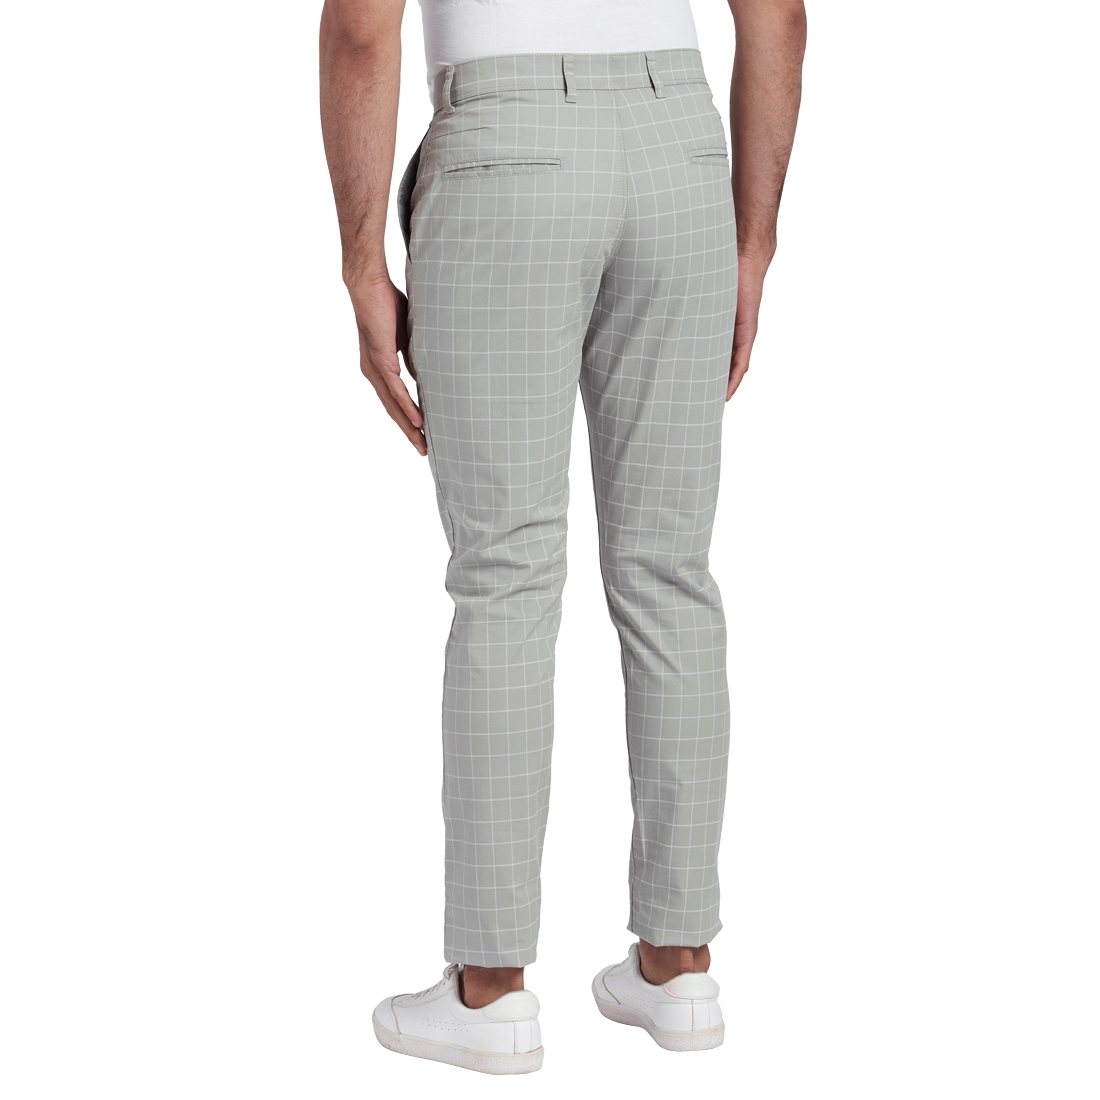 ColorPlus | ColorPlus Grey Trouser 3